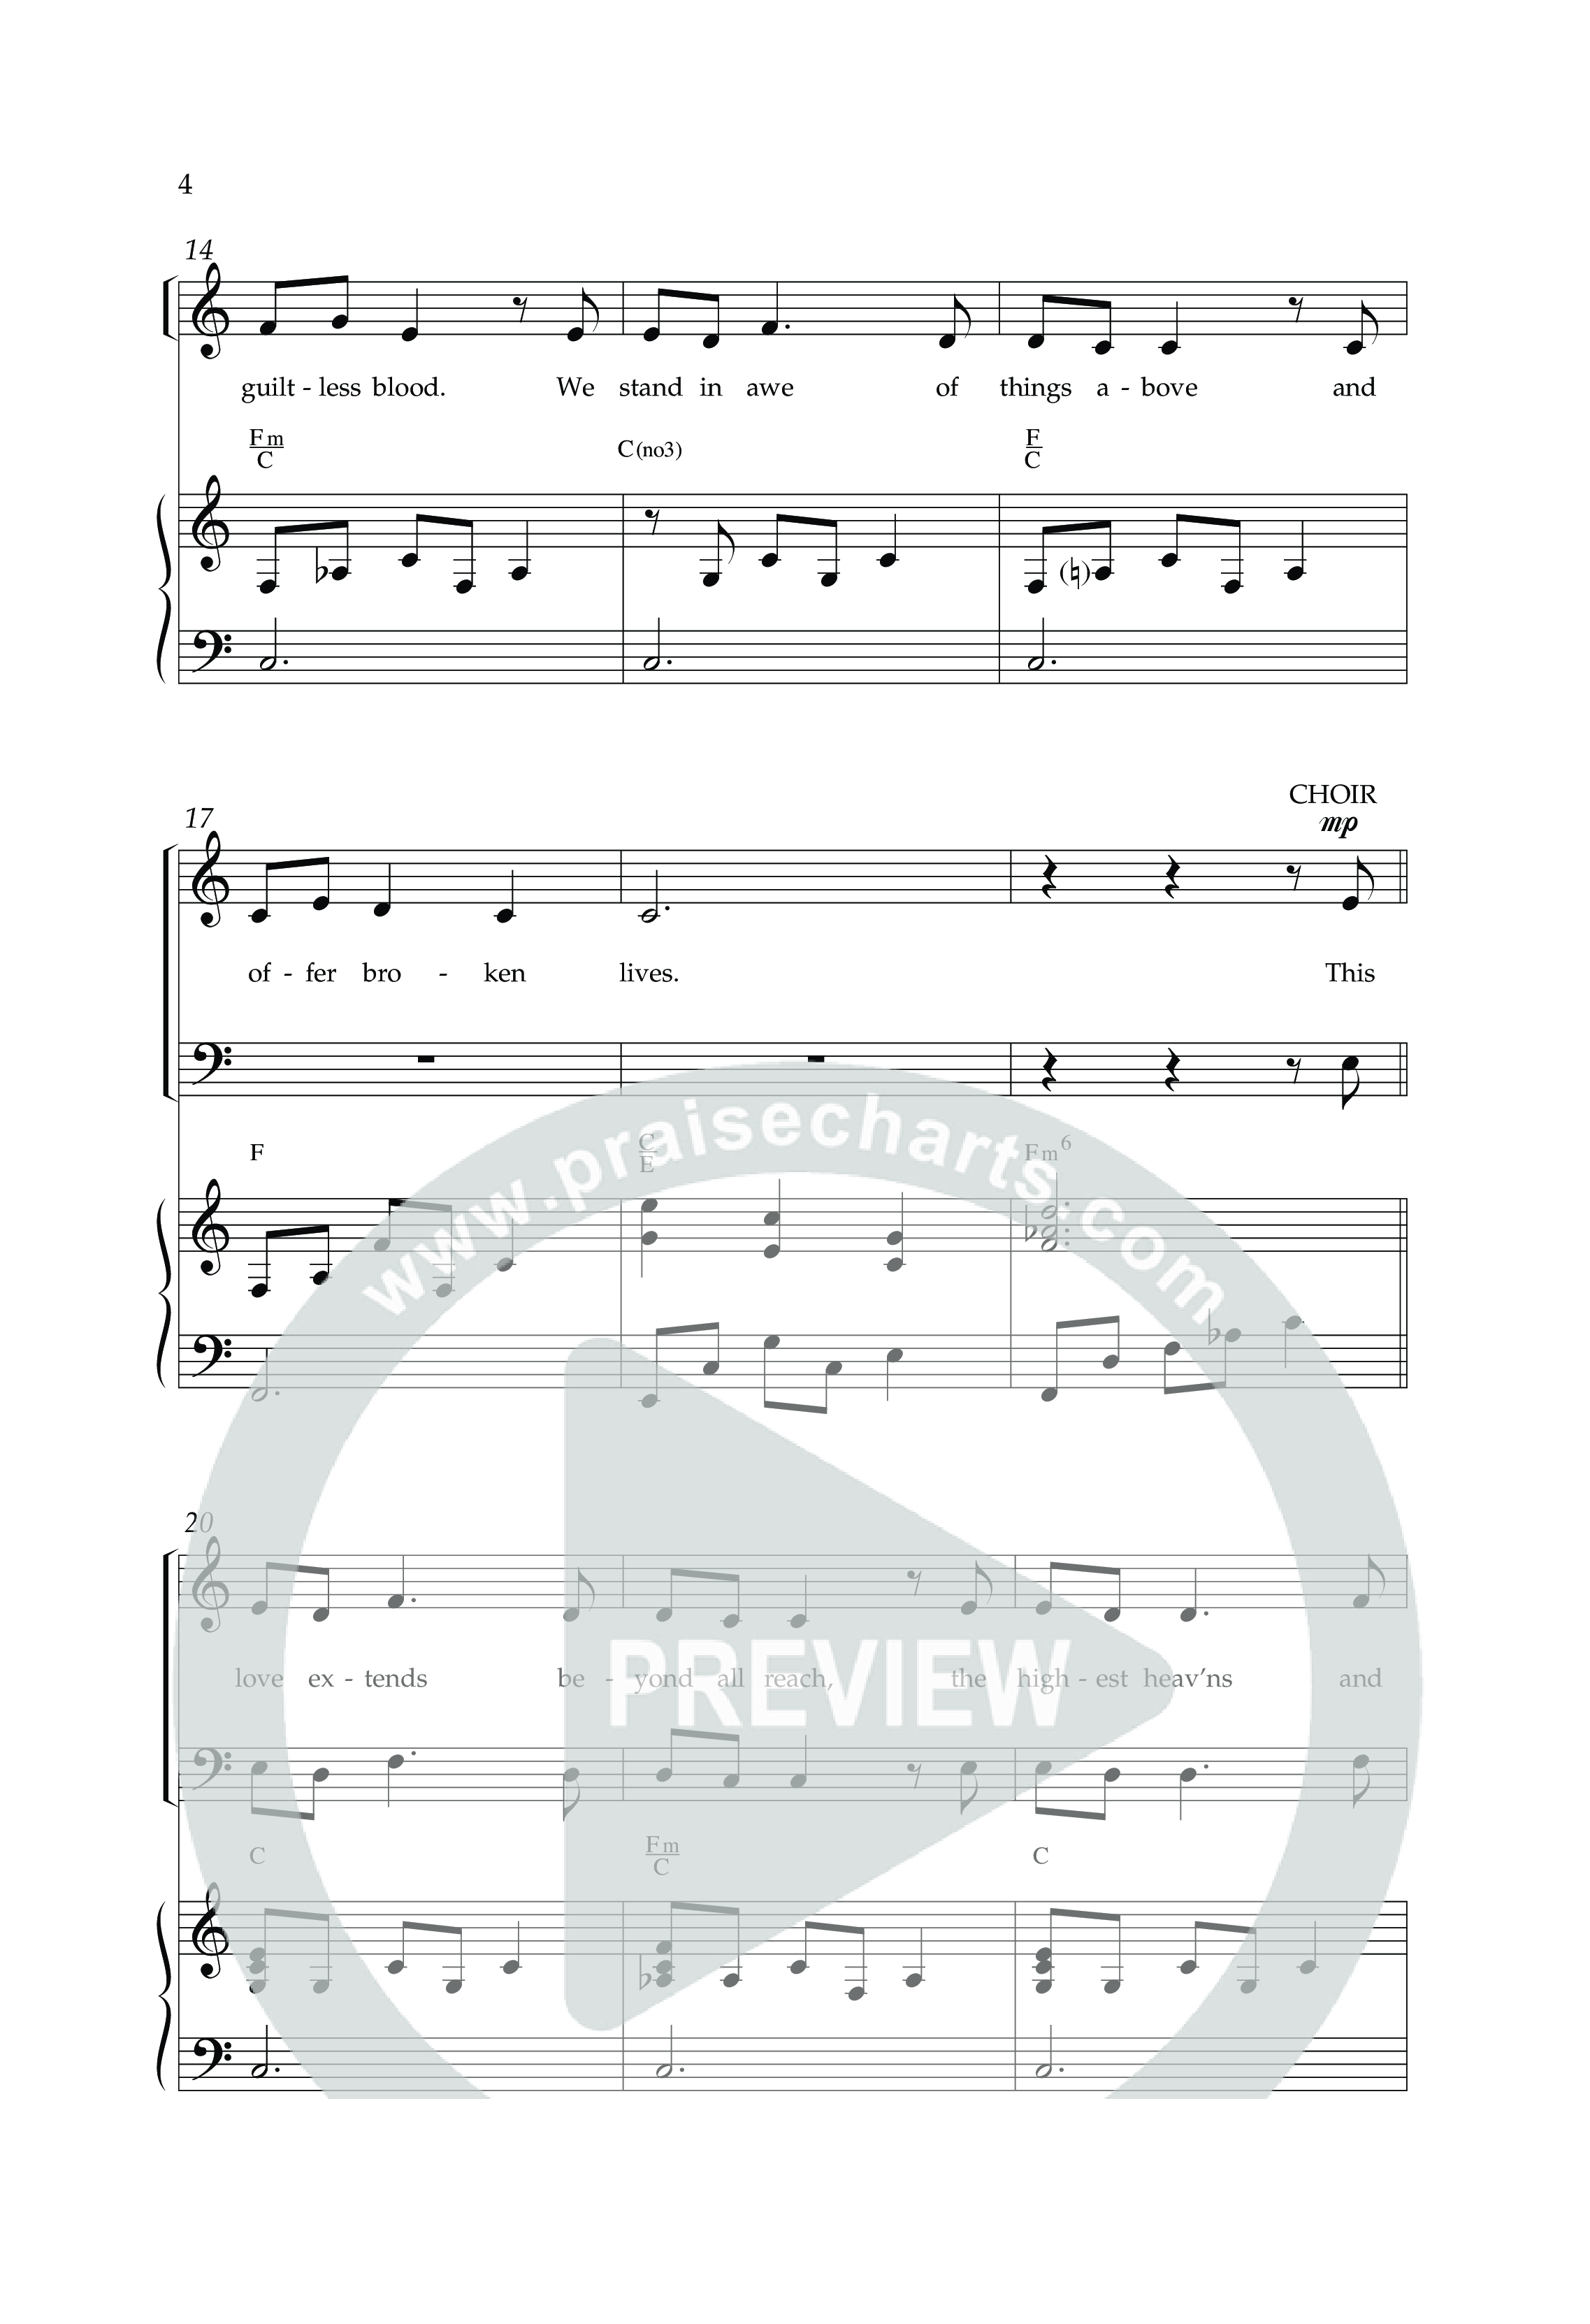 The Love Of Christ (Choral Anthem SATB) Anthem (SATB/Piano) (Lifeway Choral / Arr. Camp Kirkland)